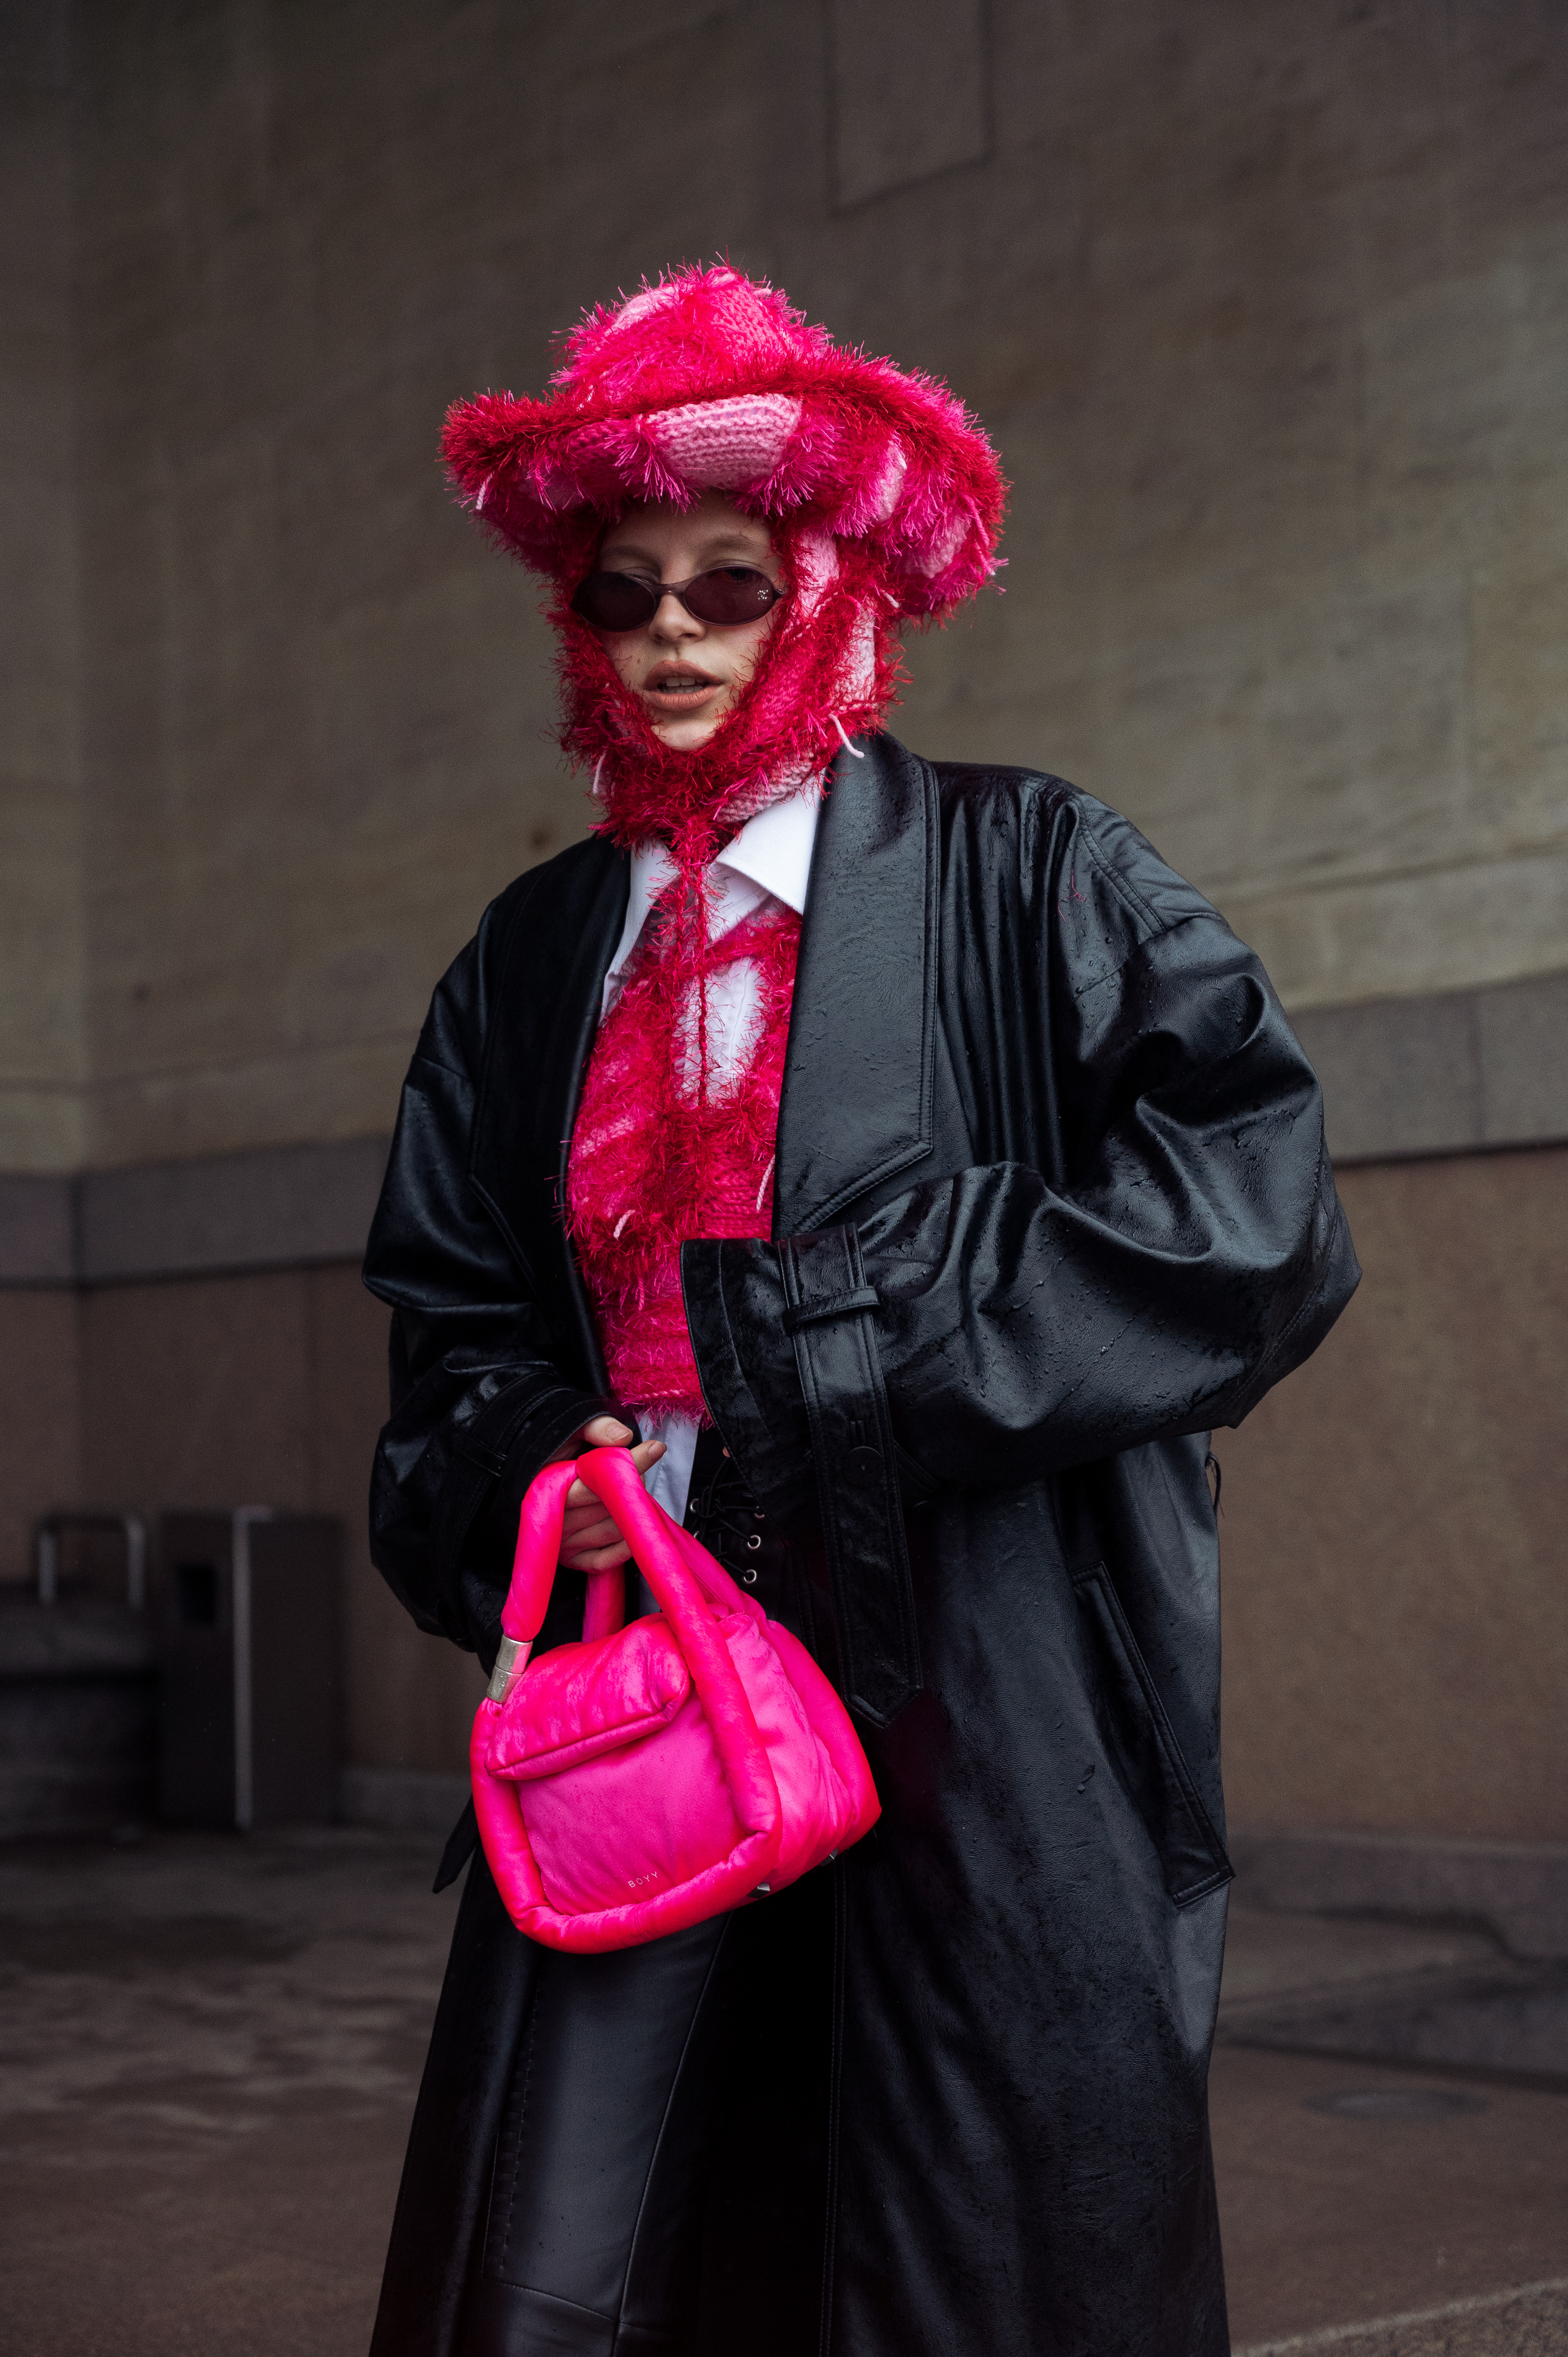 Lotta Lavanti na semana de moda de Copenhagen, na Dinamarca usando chapéu rosa, casaco preto, calça preta e bolsa rosa